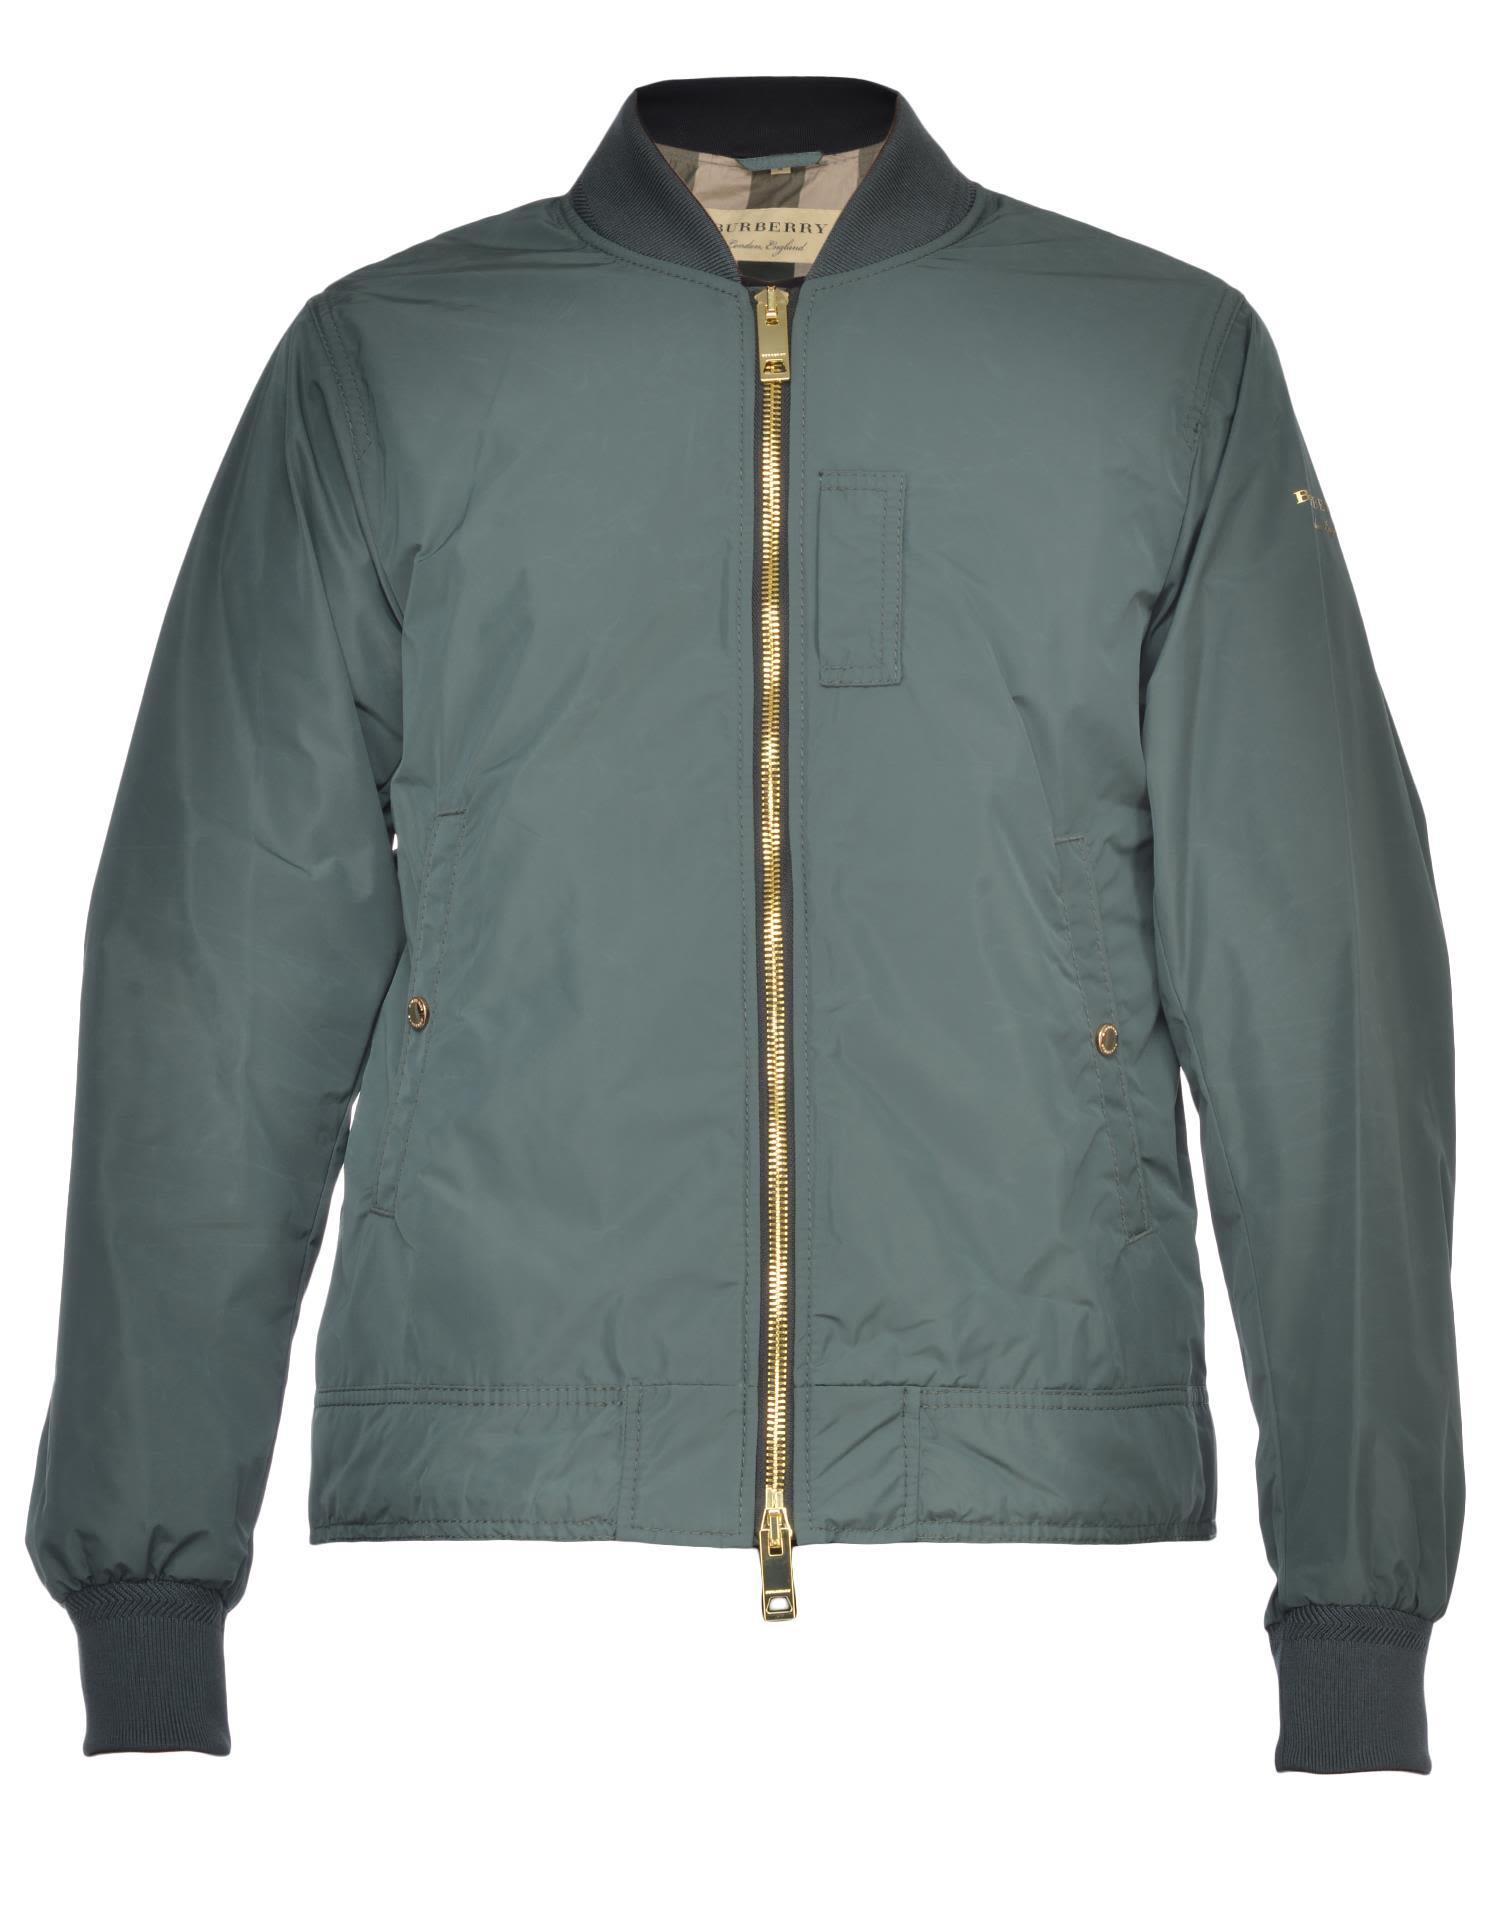 burberry green bomber jacket